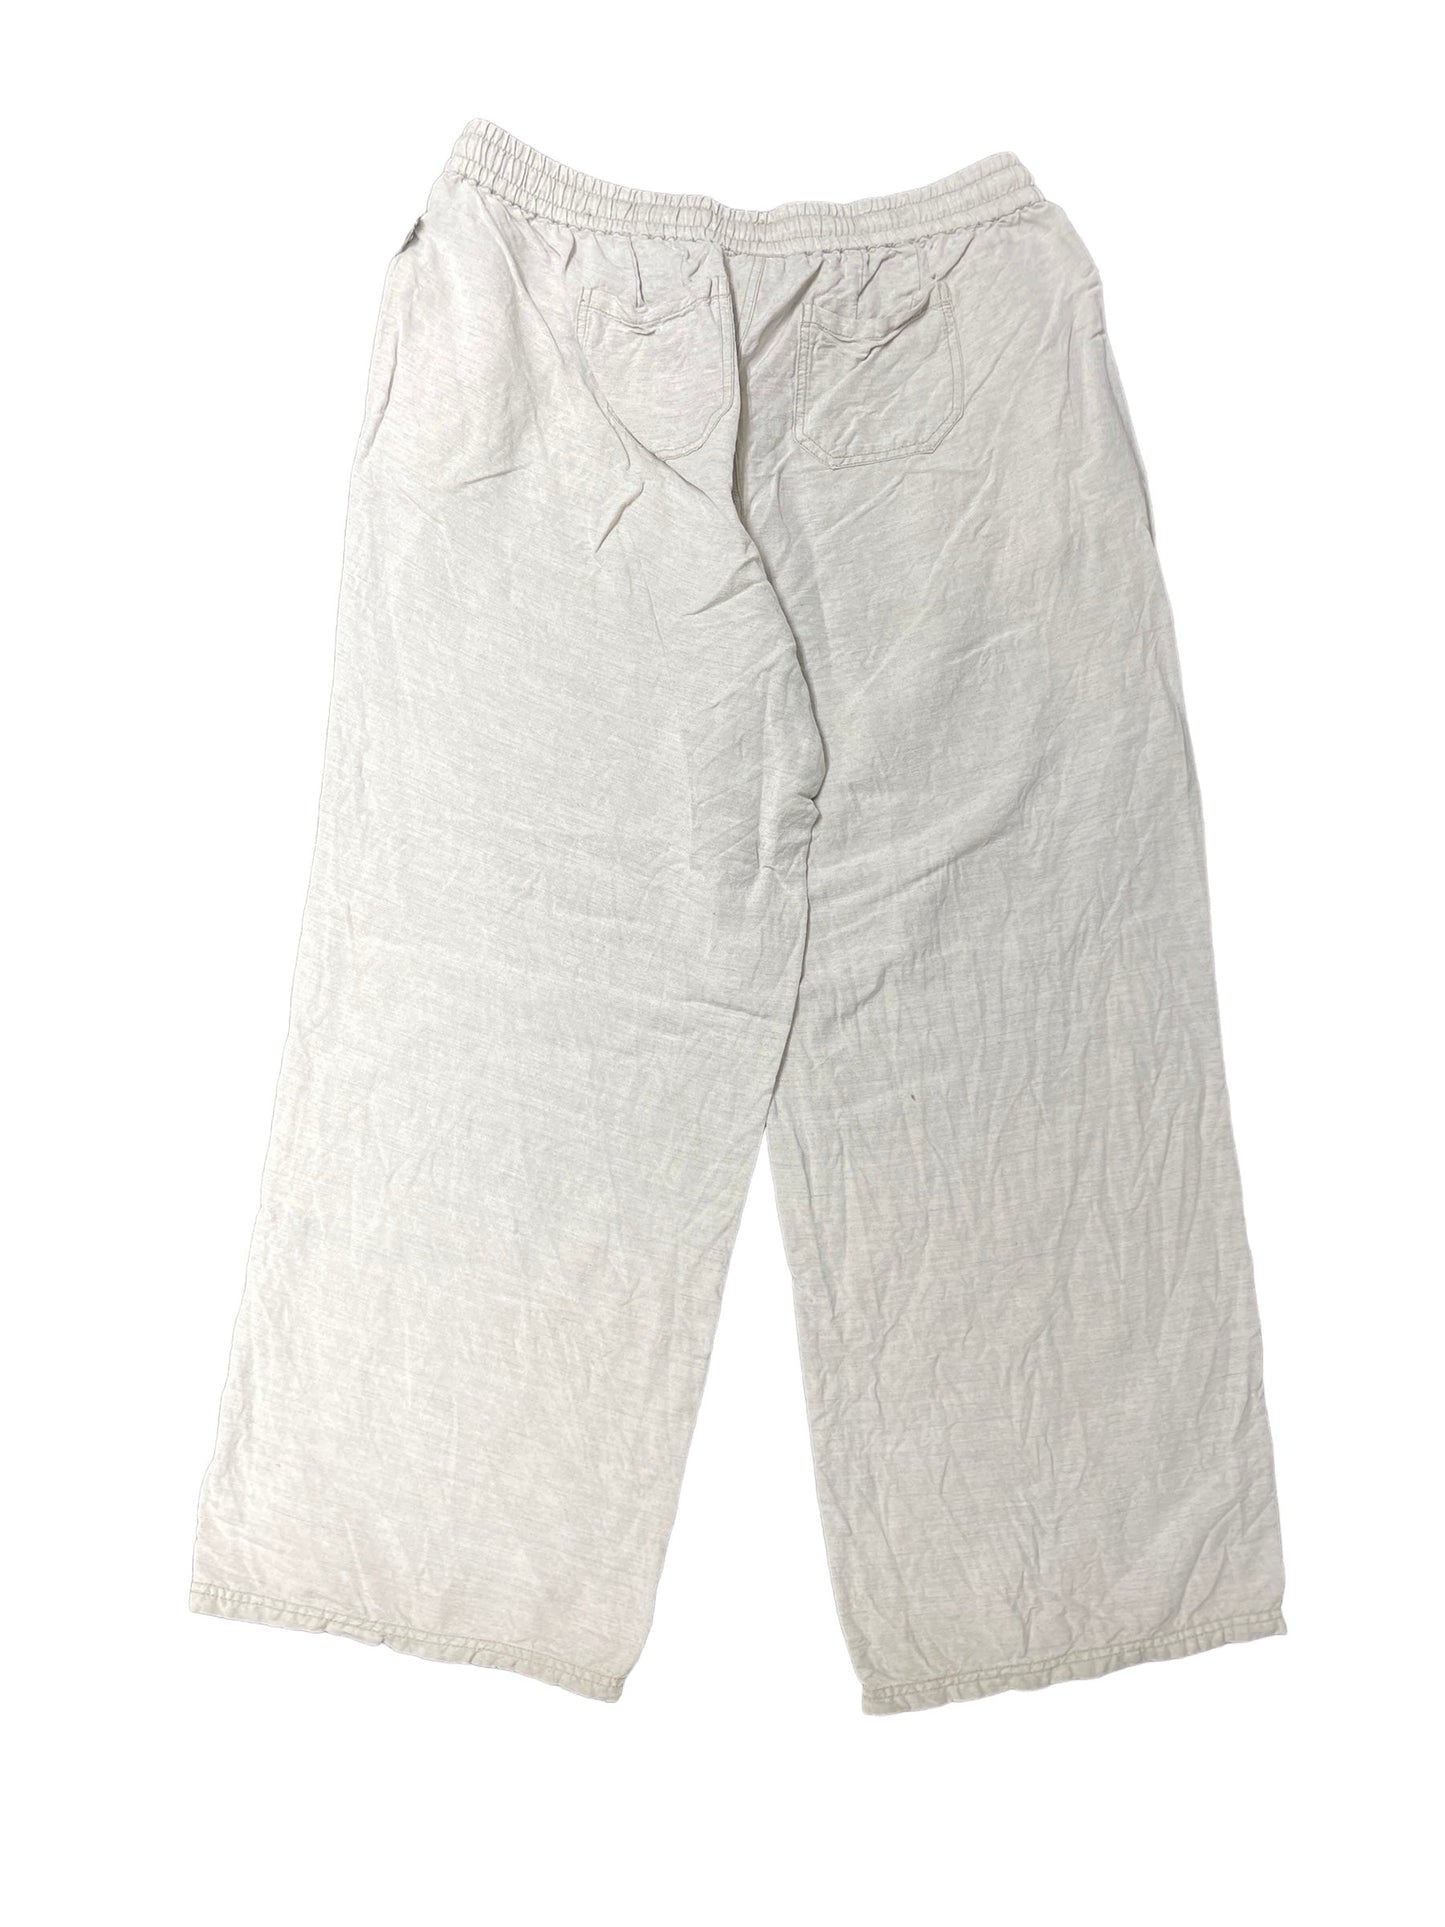 Pants Other By Lane Bryant  Size: 1x